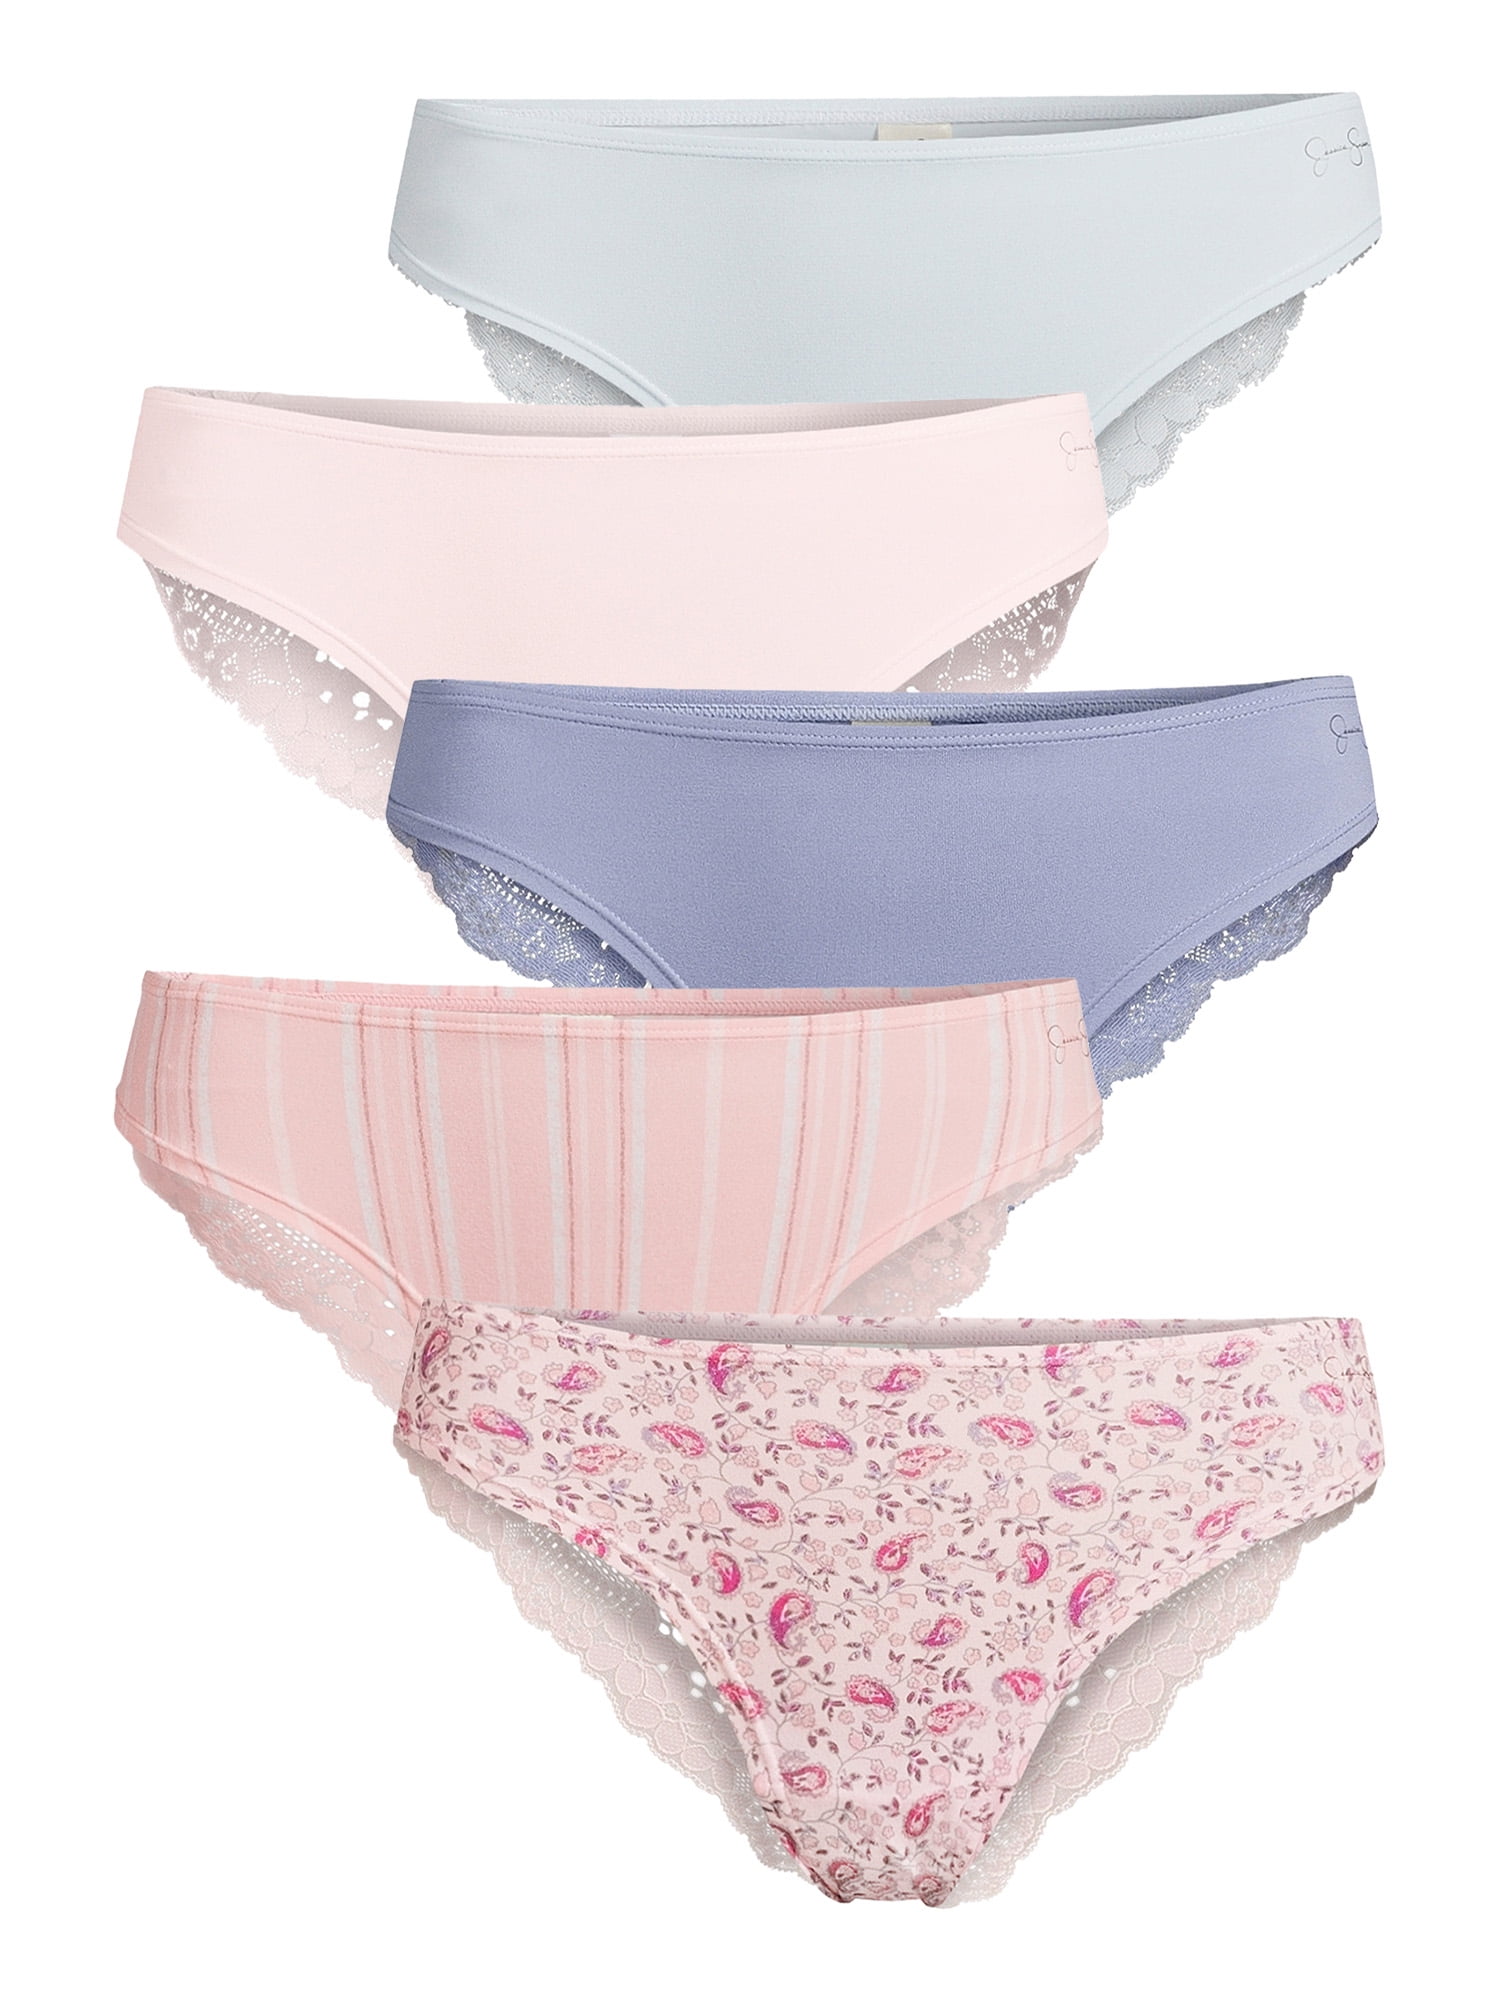 Jessica Simpson Women's Brushed Microfiber Bikini Underwear Multi-Pack 